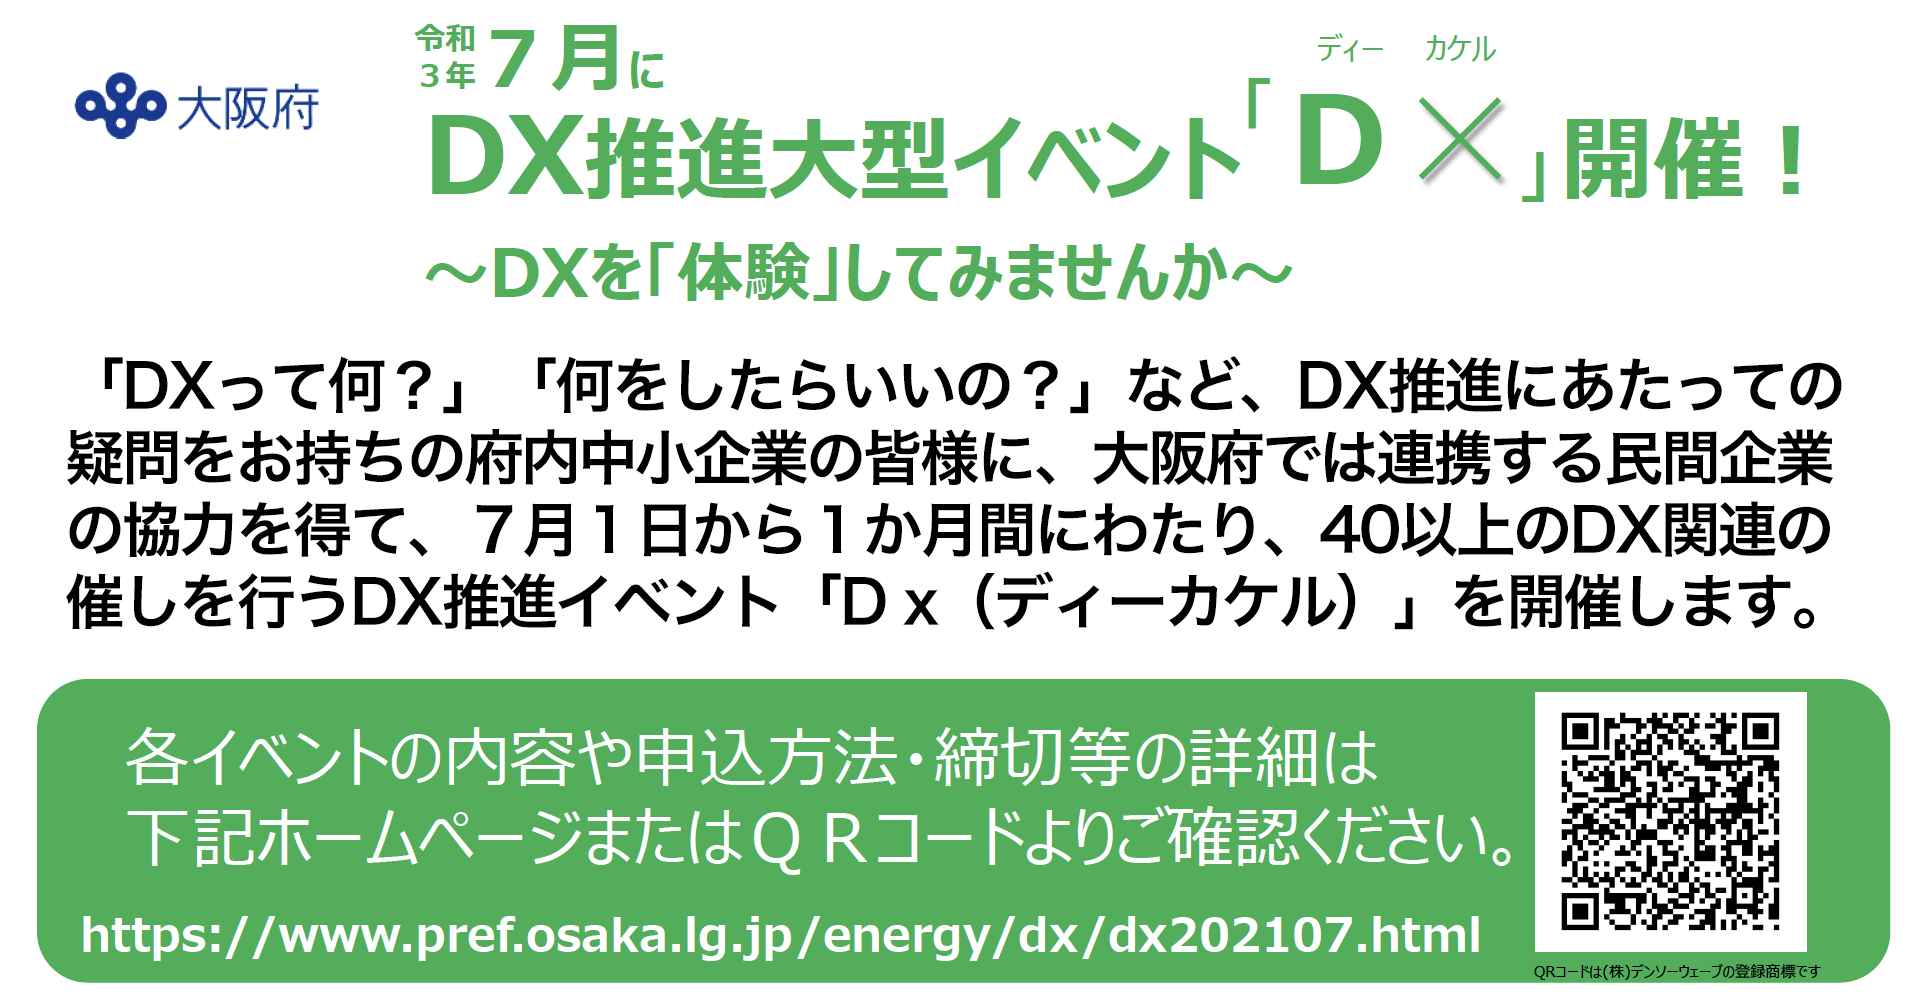 DX推進大型イベント「D×（ディーカケル）」